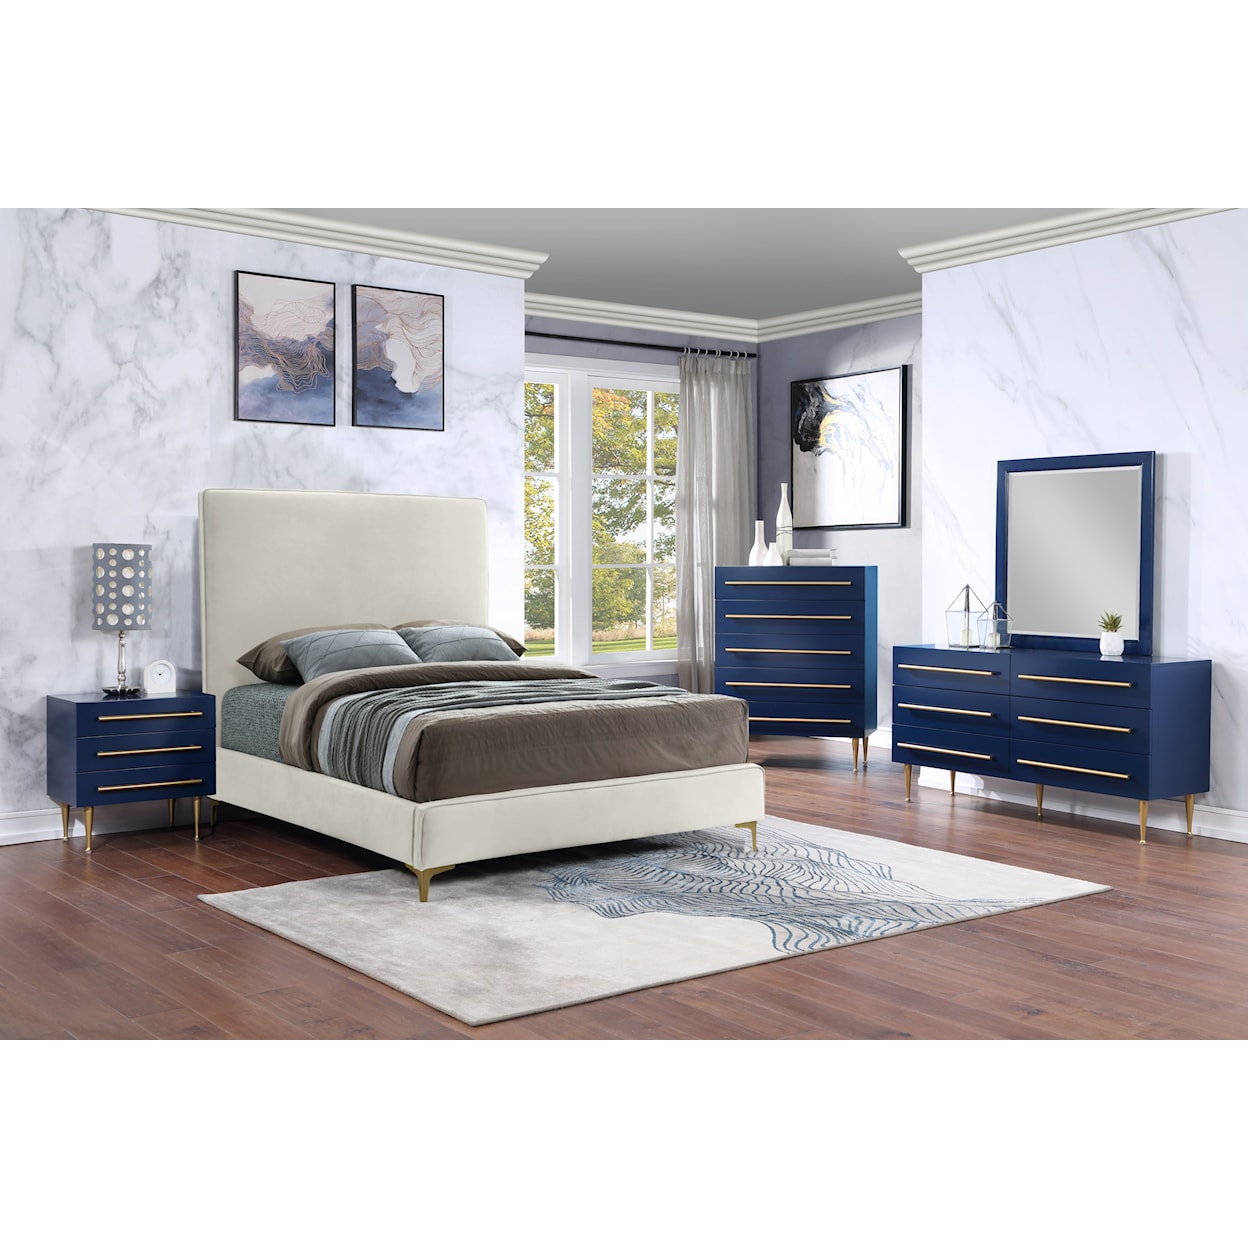 Meridian Furniture Marisol 5-Drawer Bedroom Chest